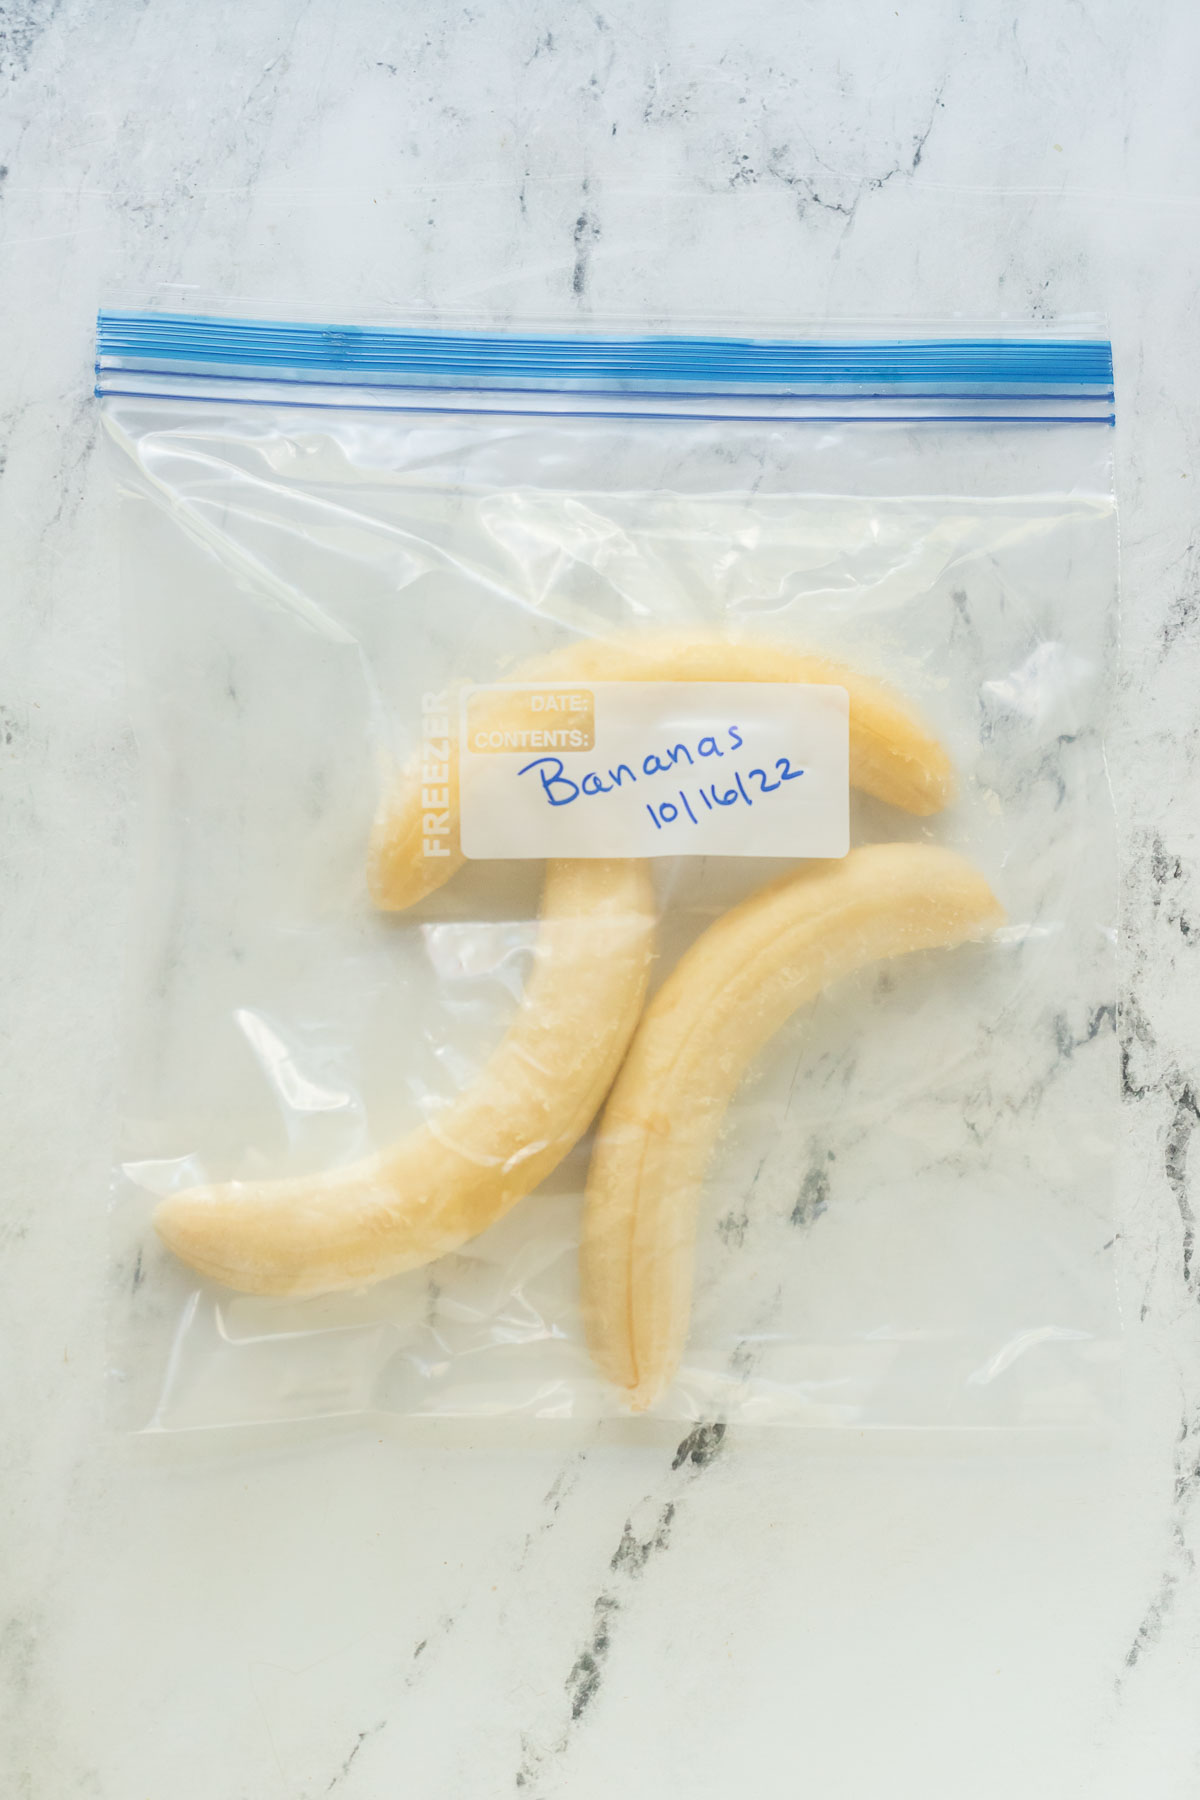 freezer bag with three frozen bananas in it